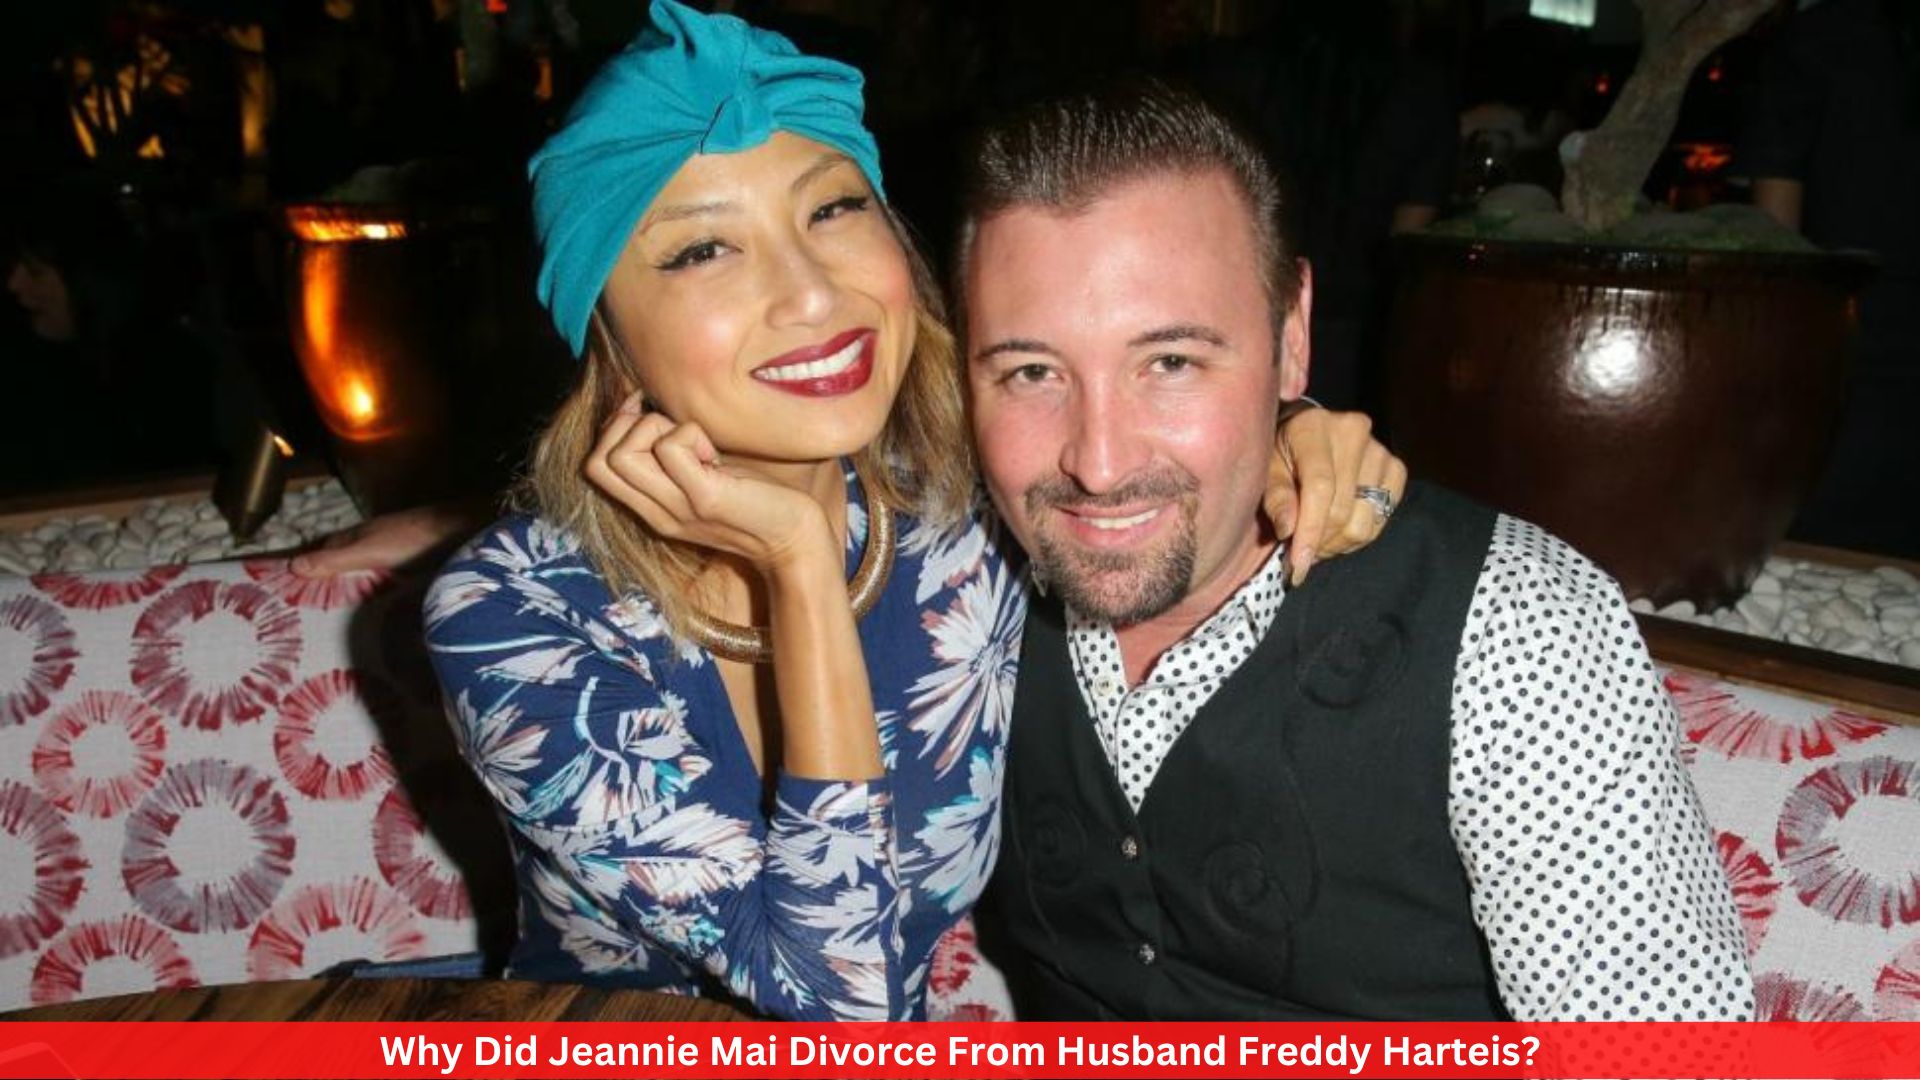 Why Did Jeannie Mai Divorce From Husband Freddy Harteis?